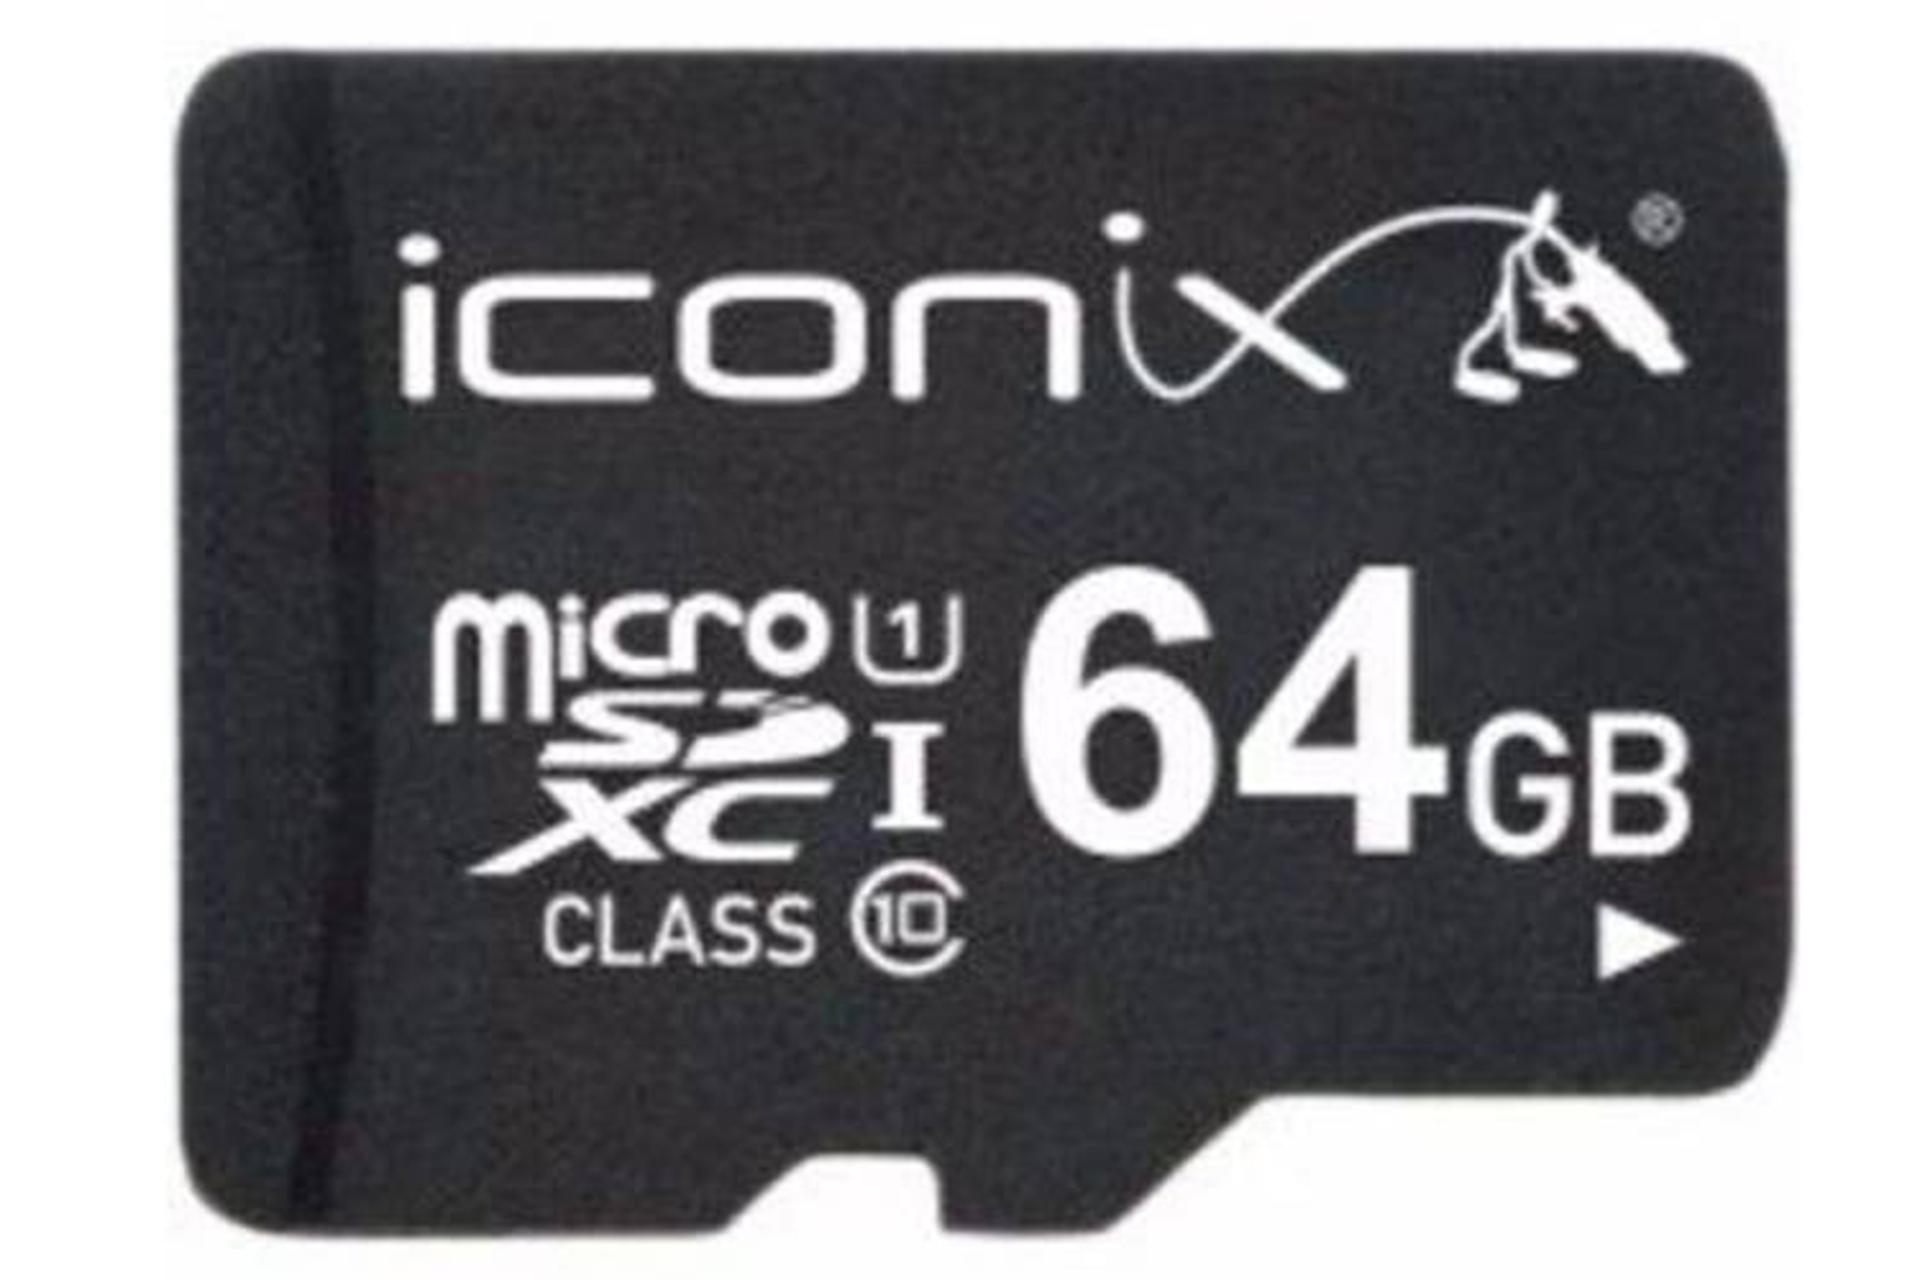 iconix Super Speed microSDXC Class 10 UHS-I U3 64GB